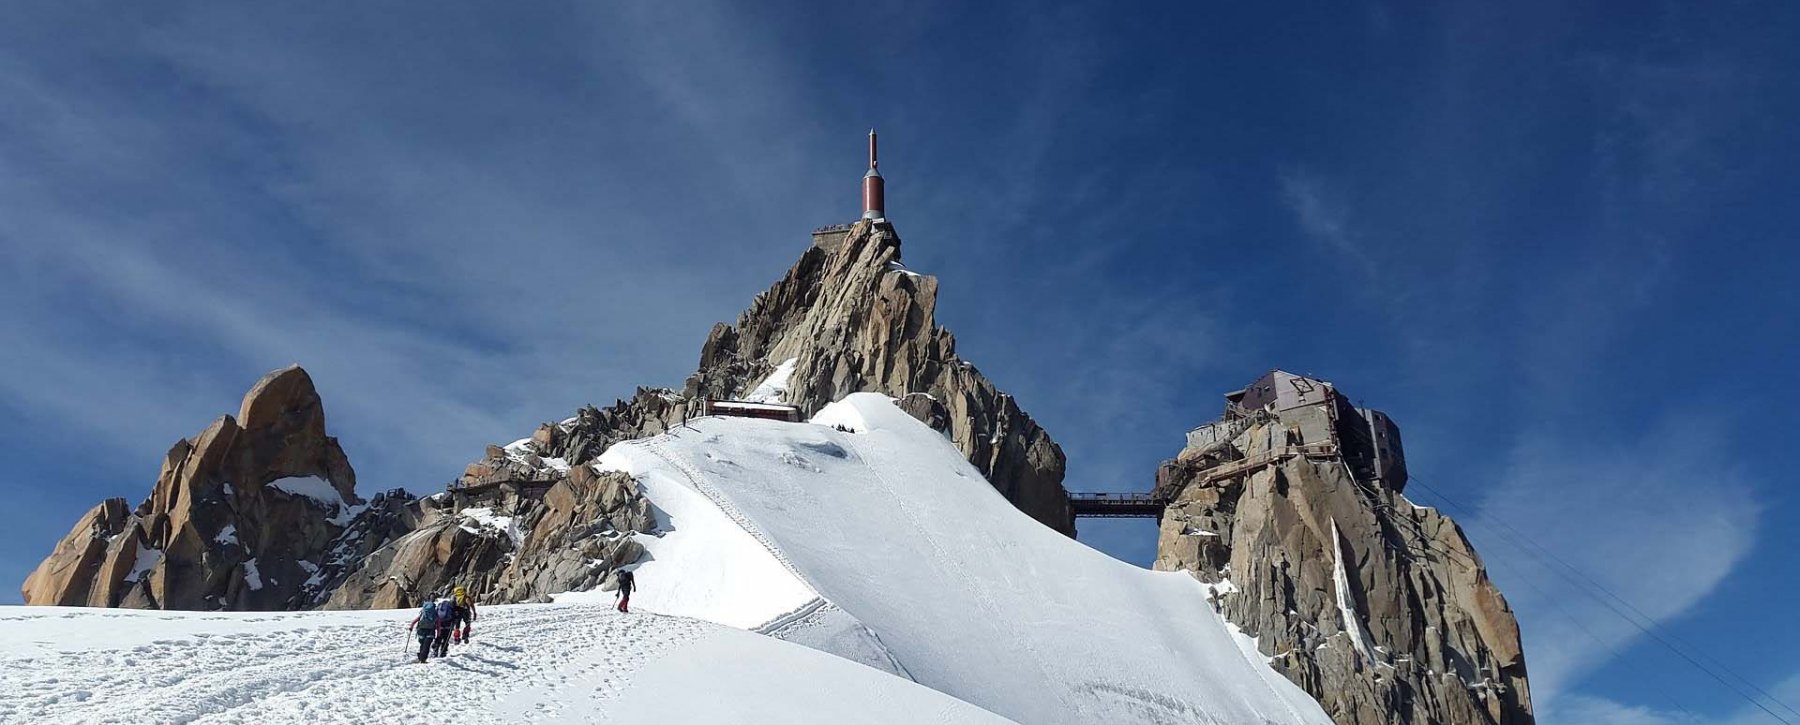 posponer tema Palacio de los niños Aiguille du Midi: Info on the visit to see Mont Blanc and cable car prices